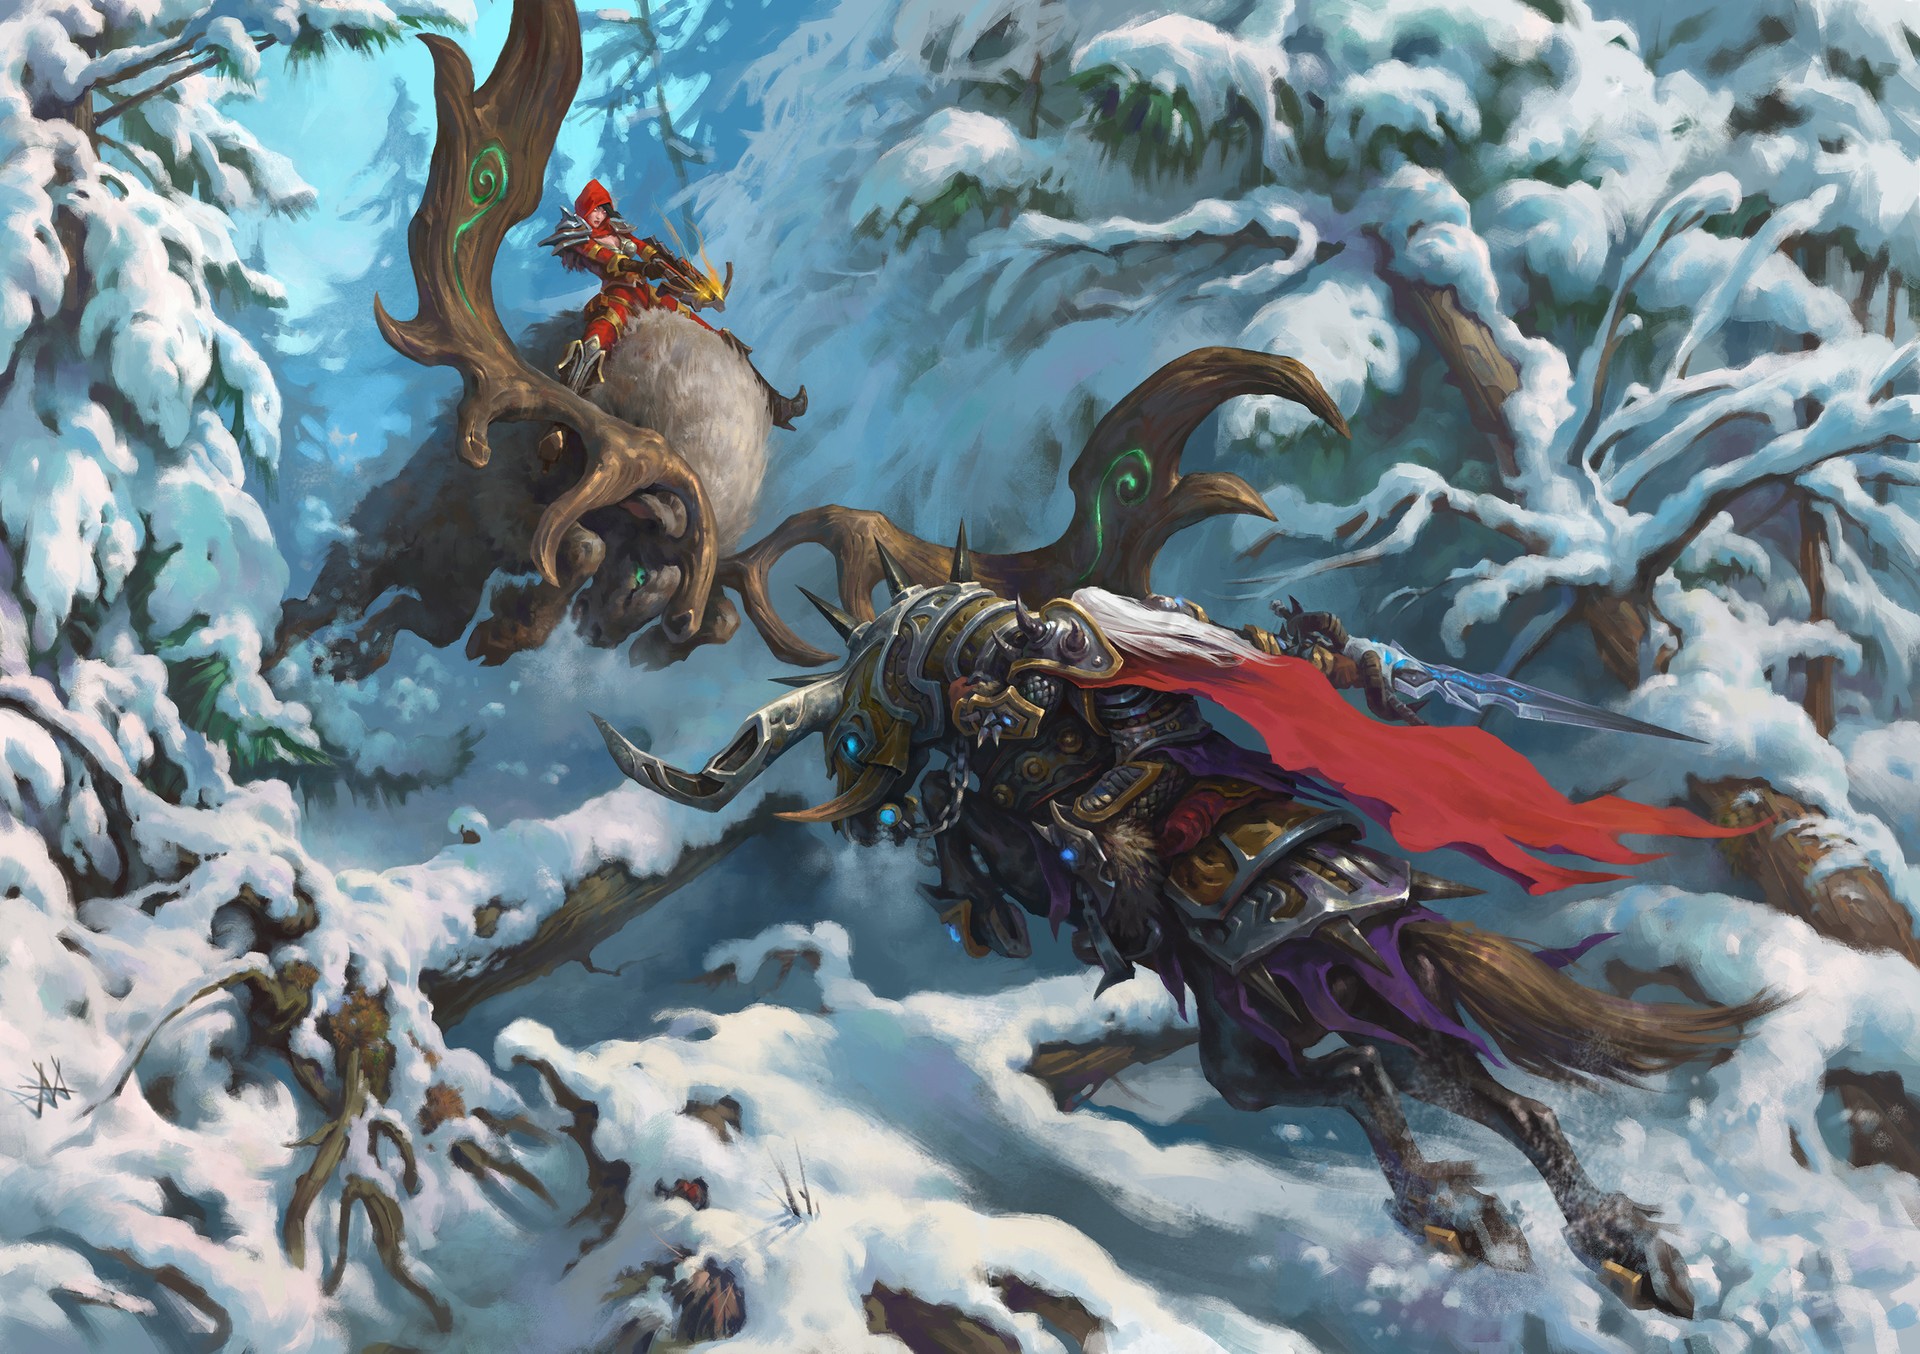 General 1920x1354 fantasy art Warcraft Diablo III Arthas Menethil Demon Hunter